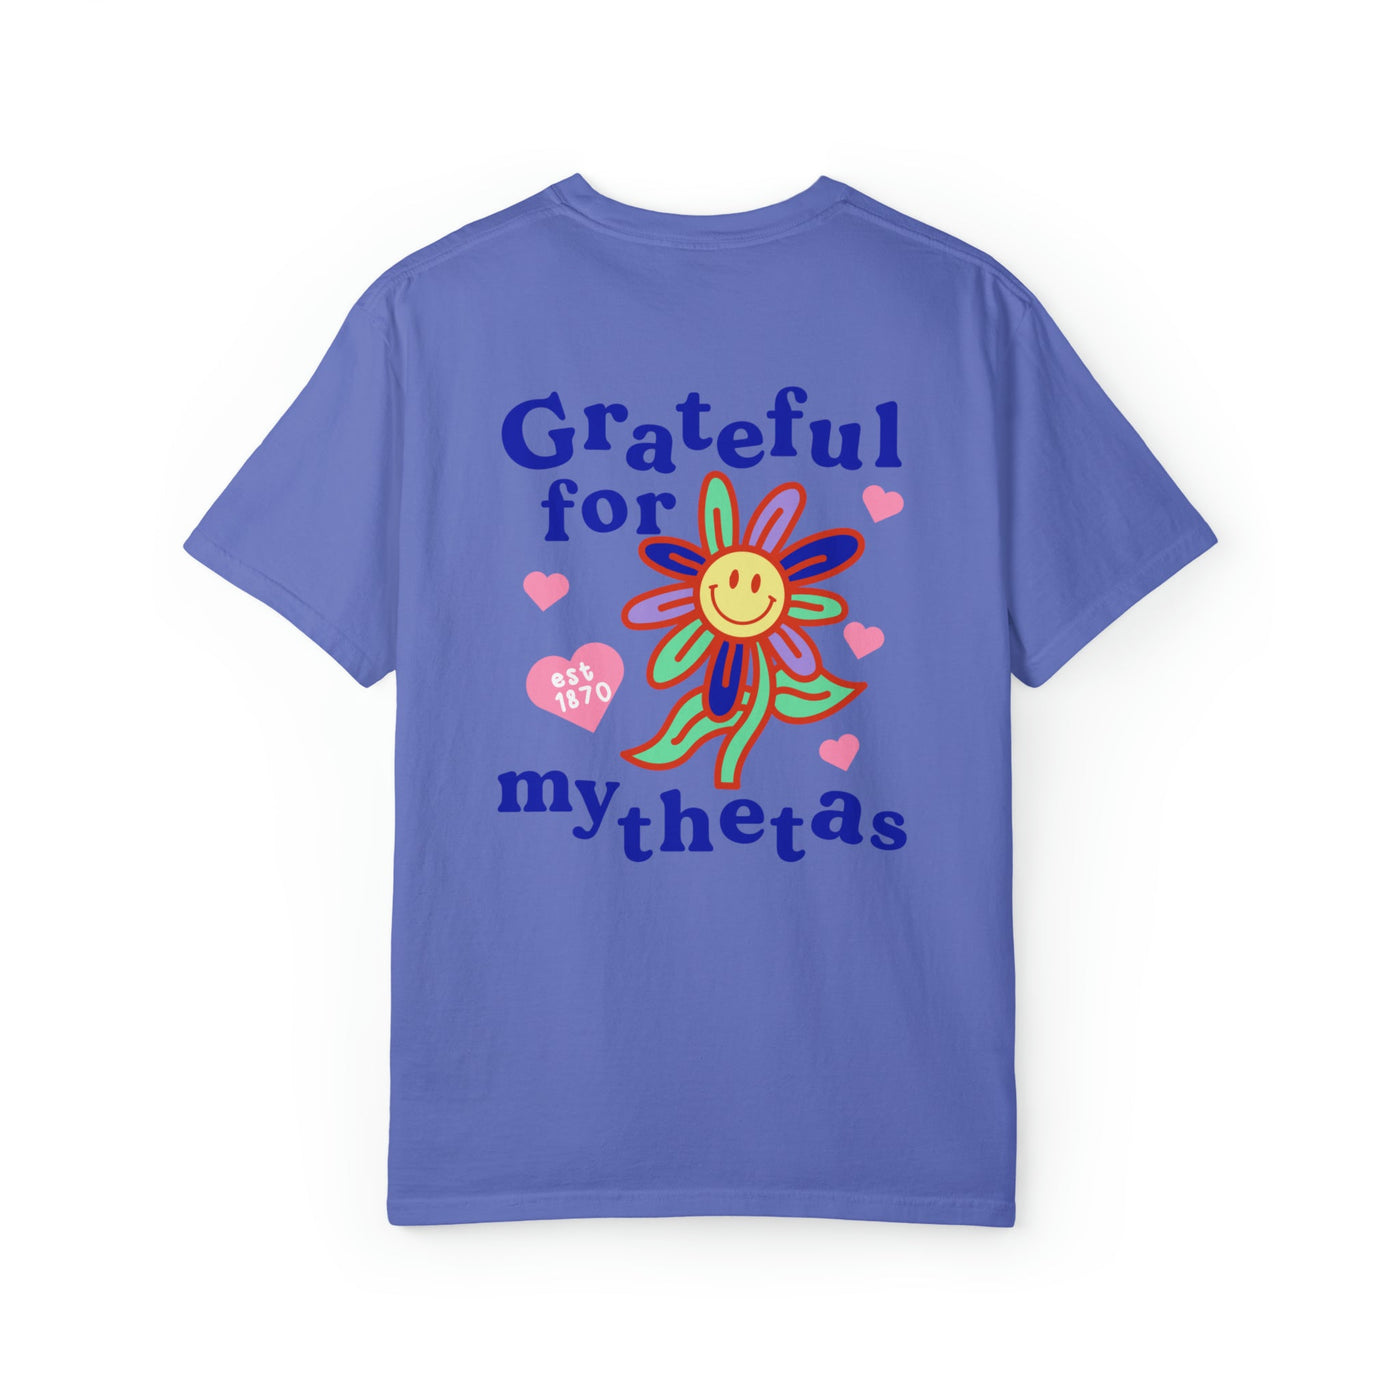 Kappa Alpha Theta Grateful Flower Sorority T-shirt